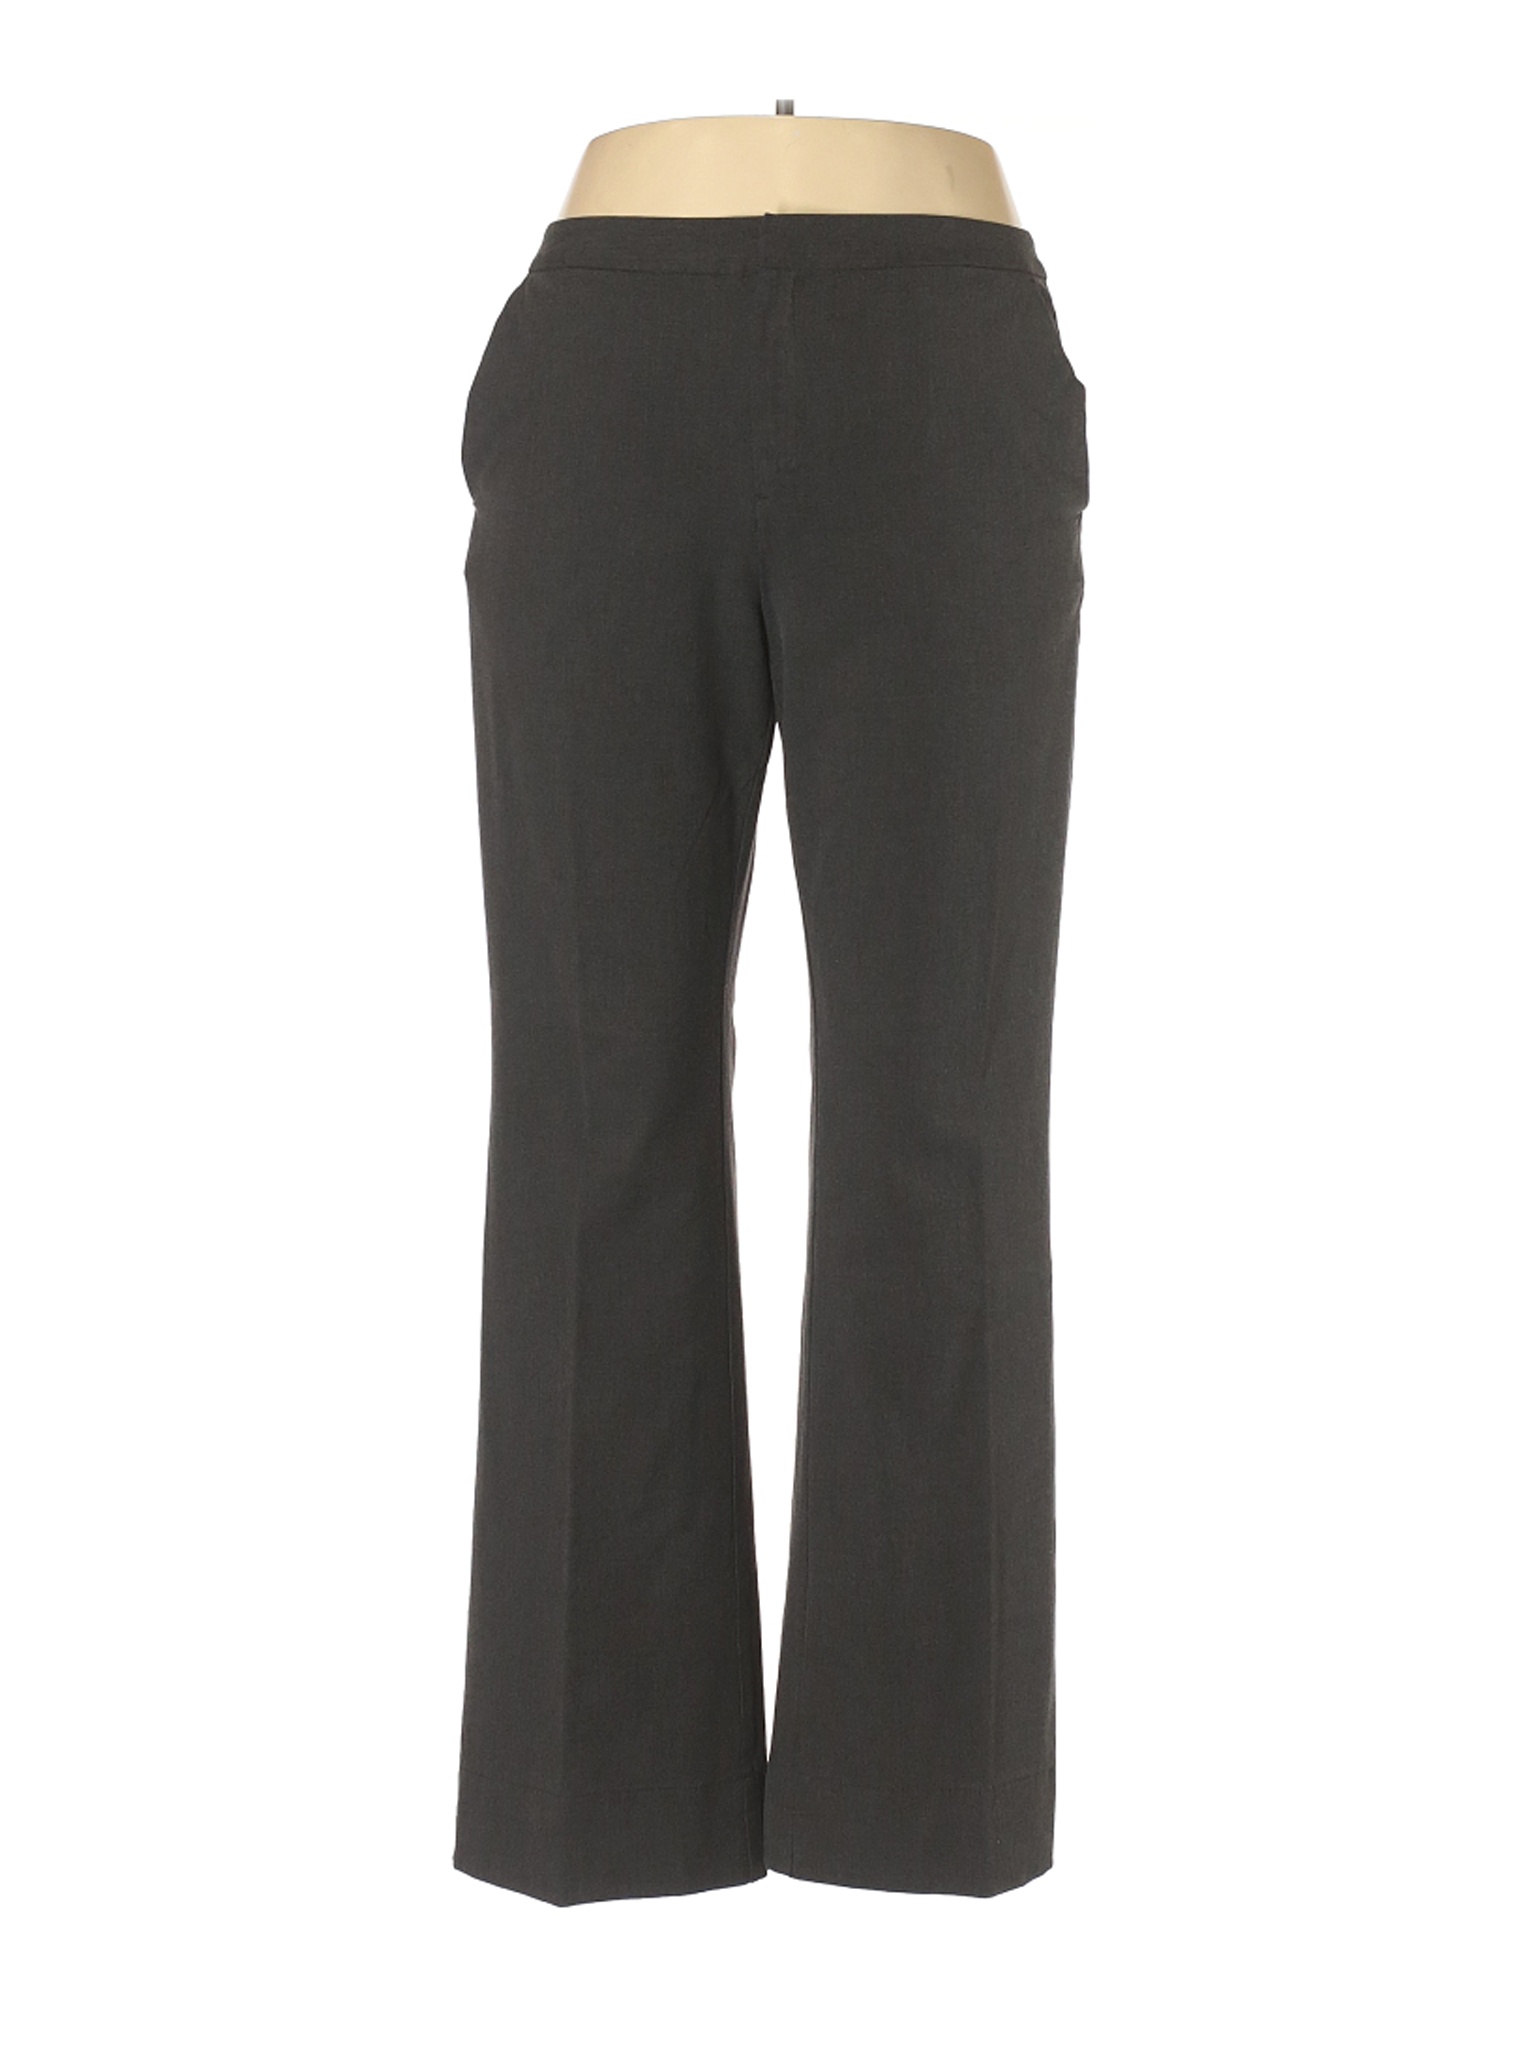 Old Navy Women Black Dress Pants 14 | eBay